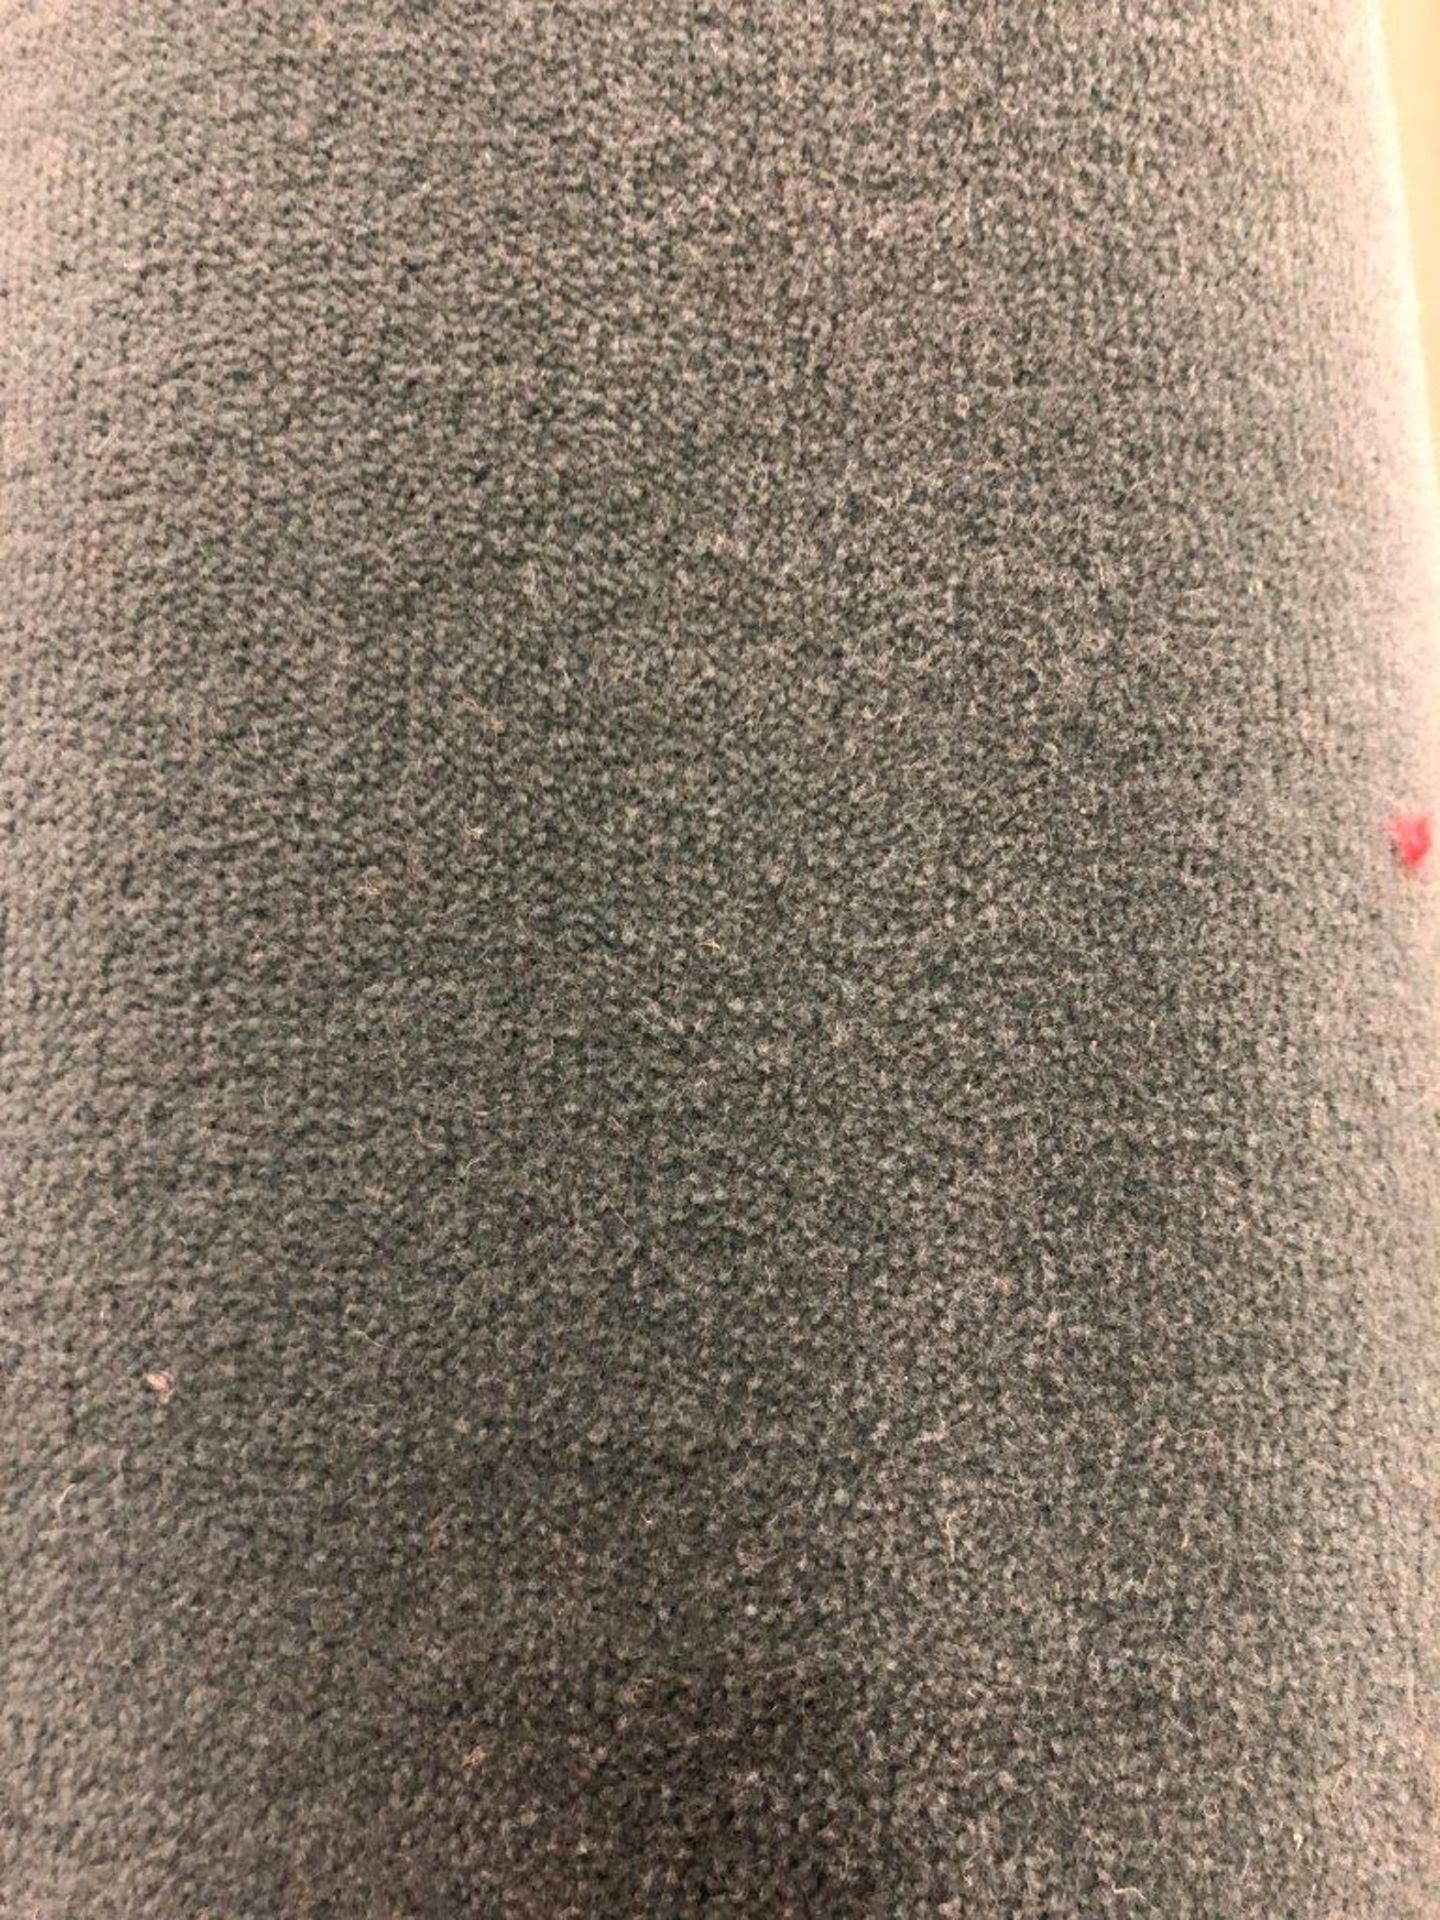 1 x Ryalux Carpet End Roll - Green 2.2x3.5m2 - Image 3 of 3